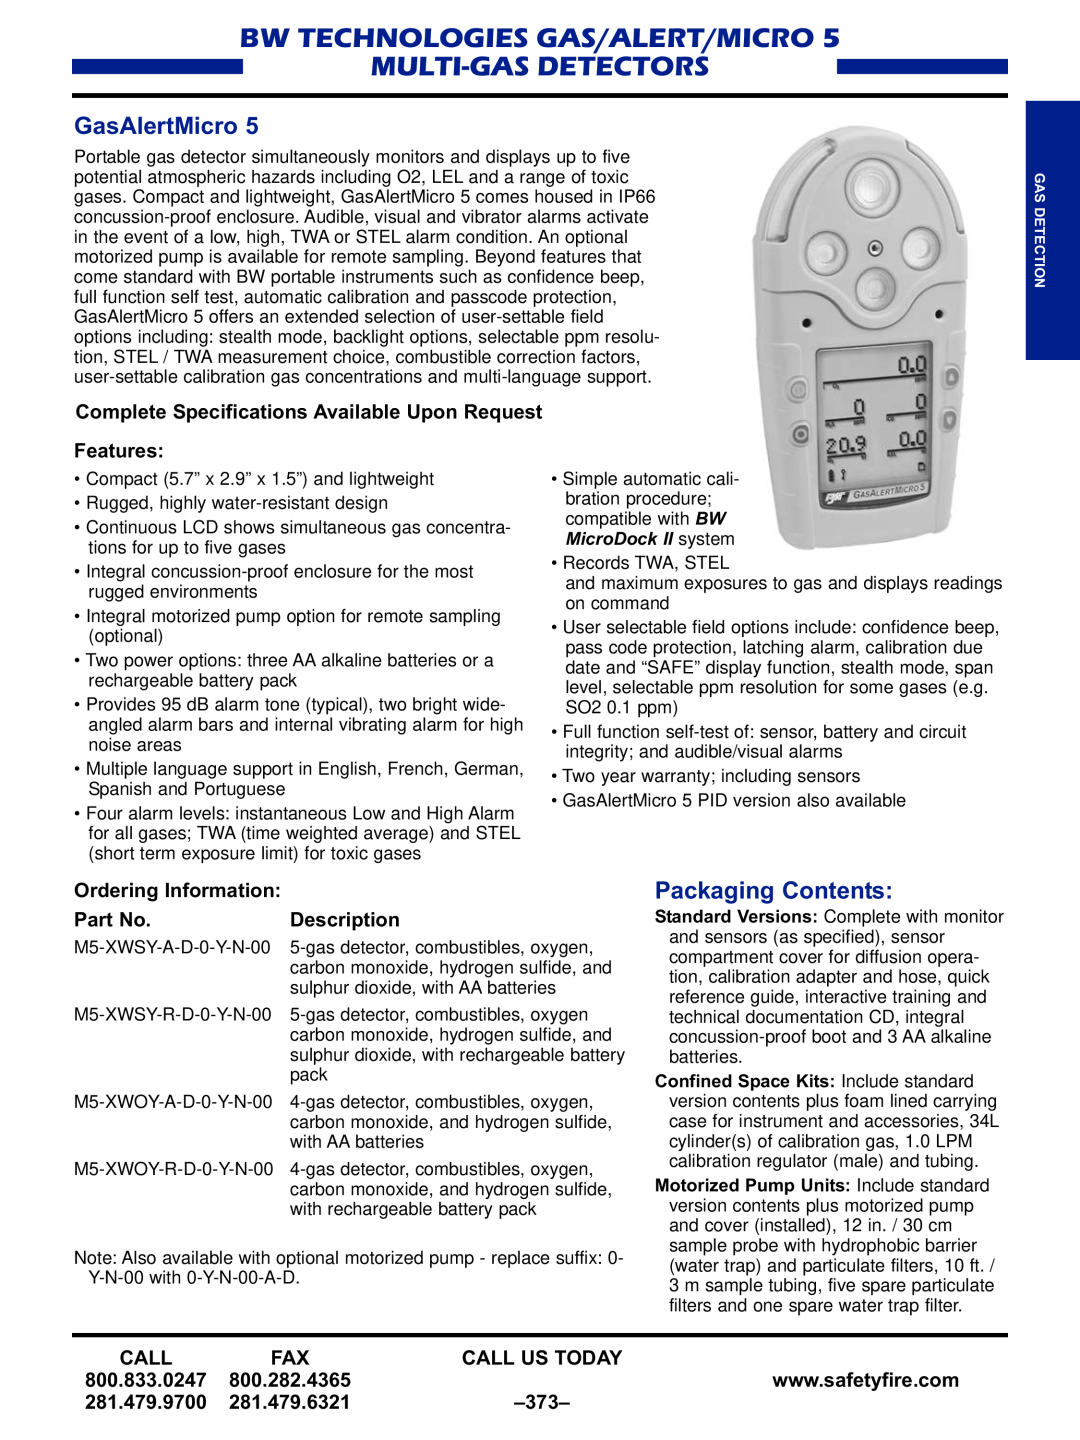 Black & Decker MULTI-GAS DETECTORS Bw Technologies Gas/Alert/Micro, Multi-Gasdetectors, GasAlertMicro, Packaging Contents 